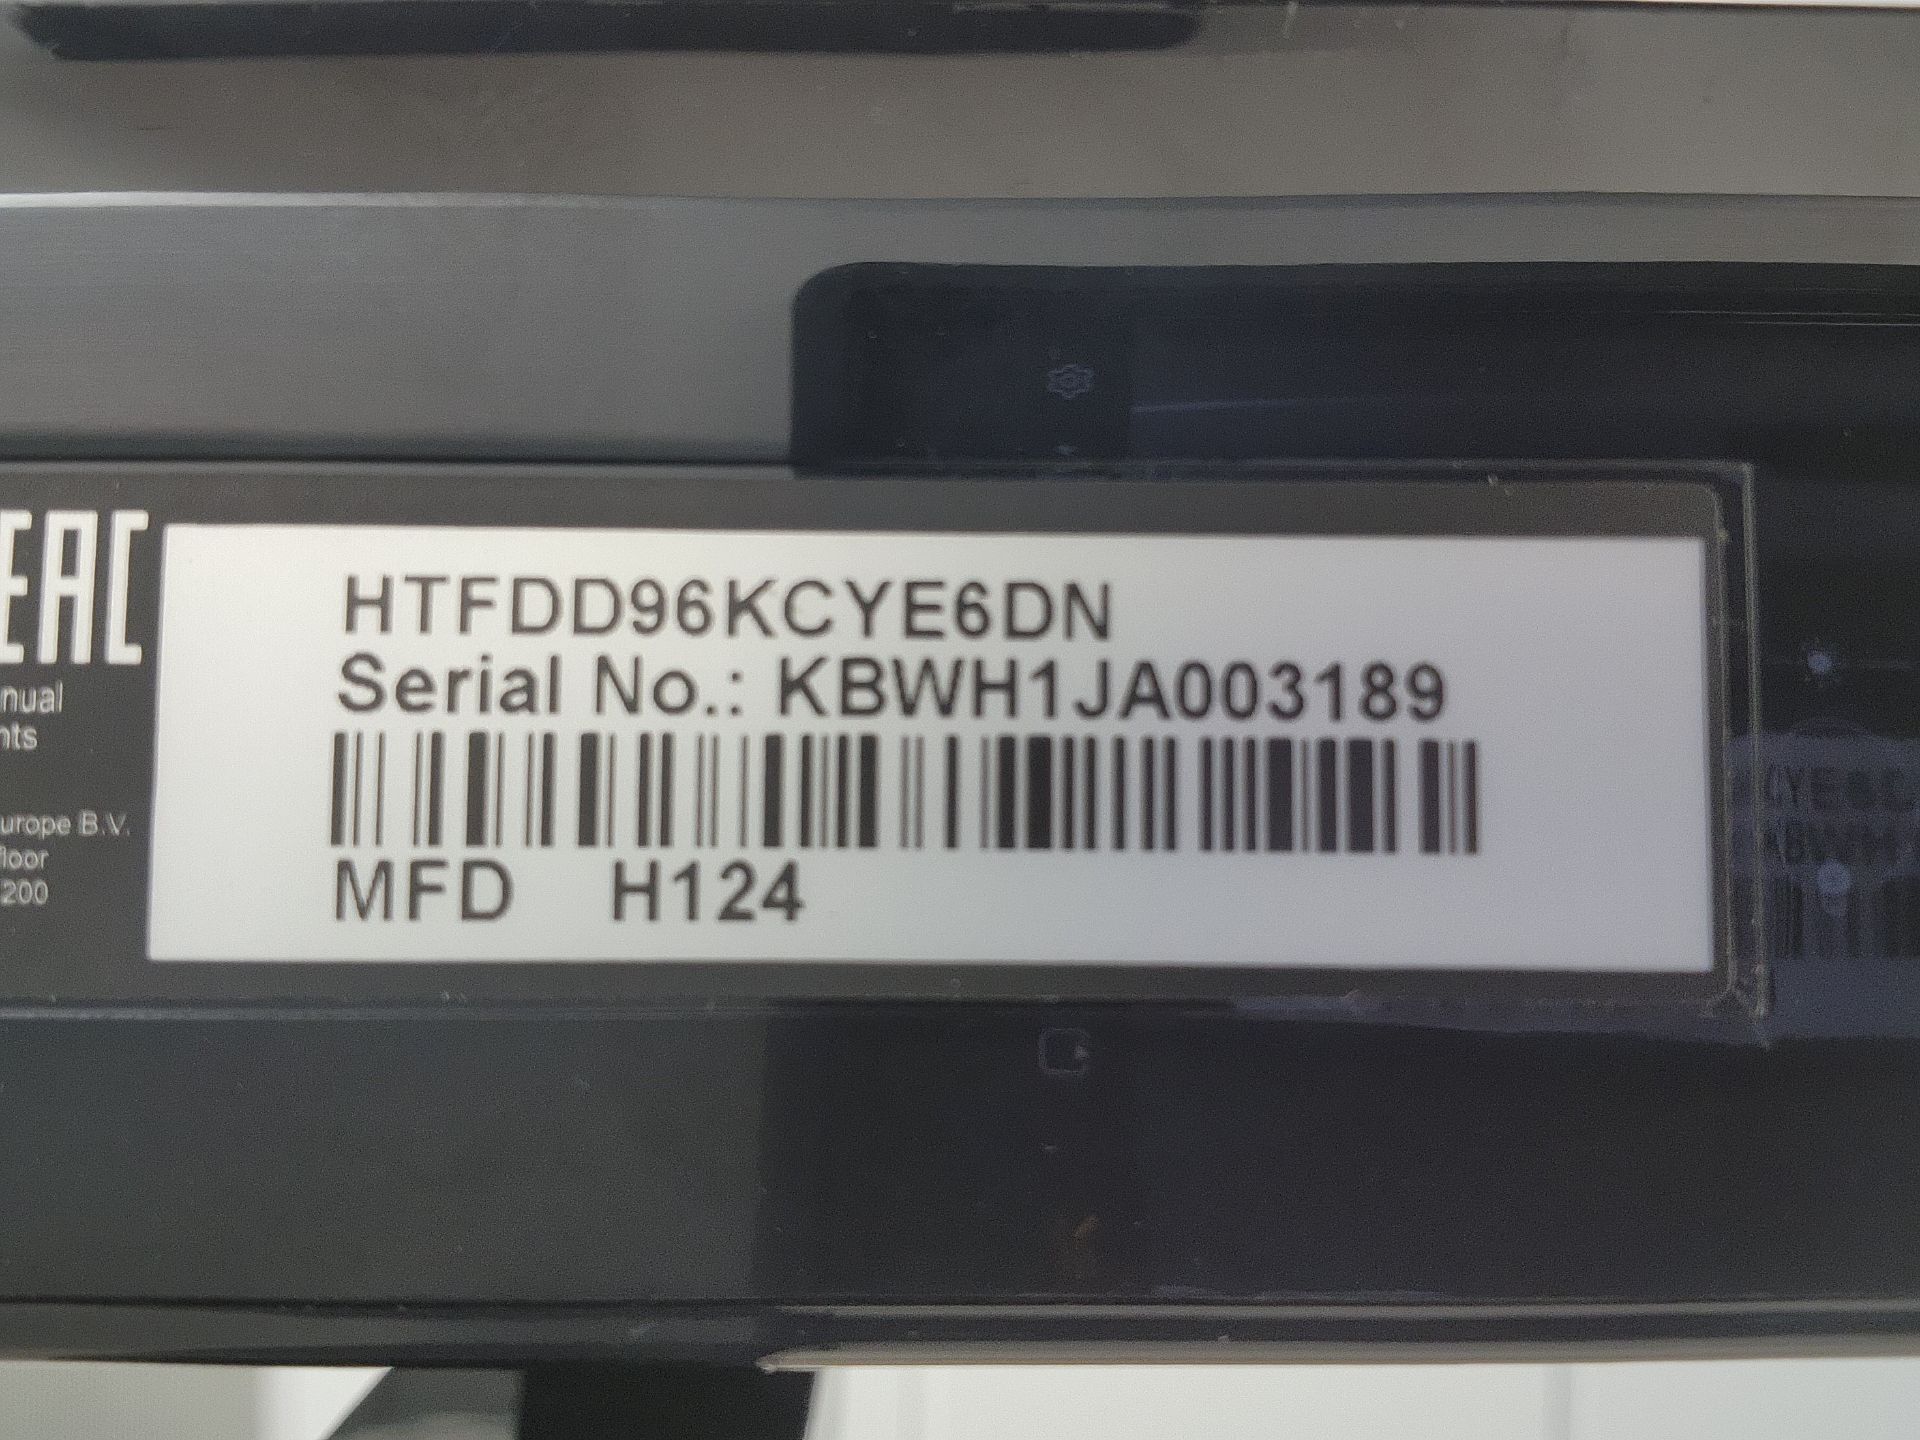 AOC Model U2879VF 28" Professional 4K UHD LED Backlit Monitor, 3840 x 2160 Pixel, S/N KBWH1JA003189 - Image 5 of 5